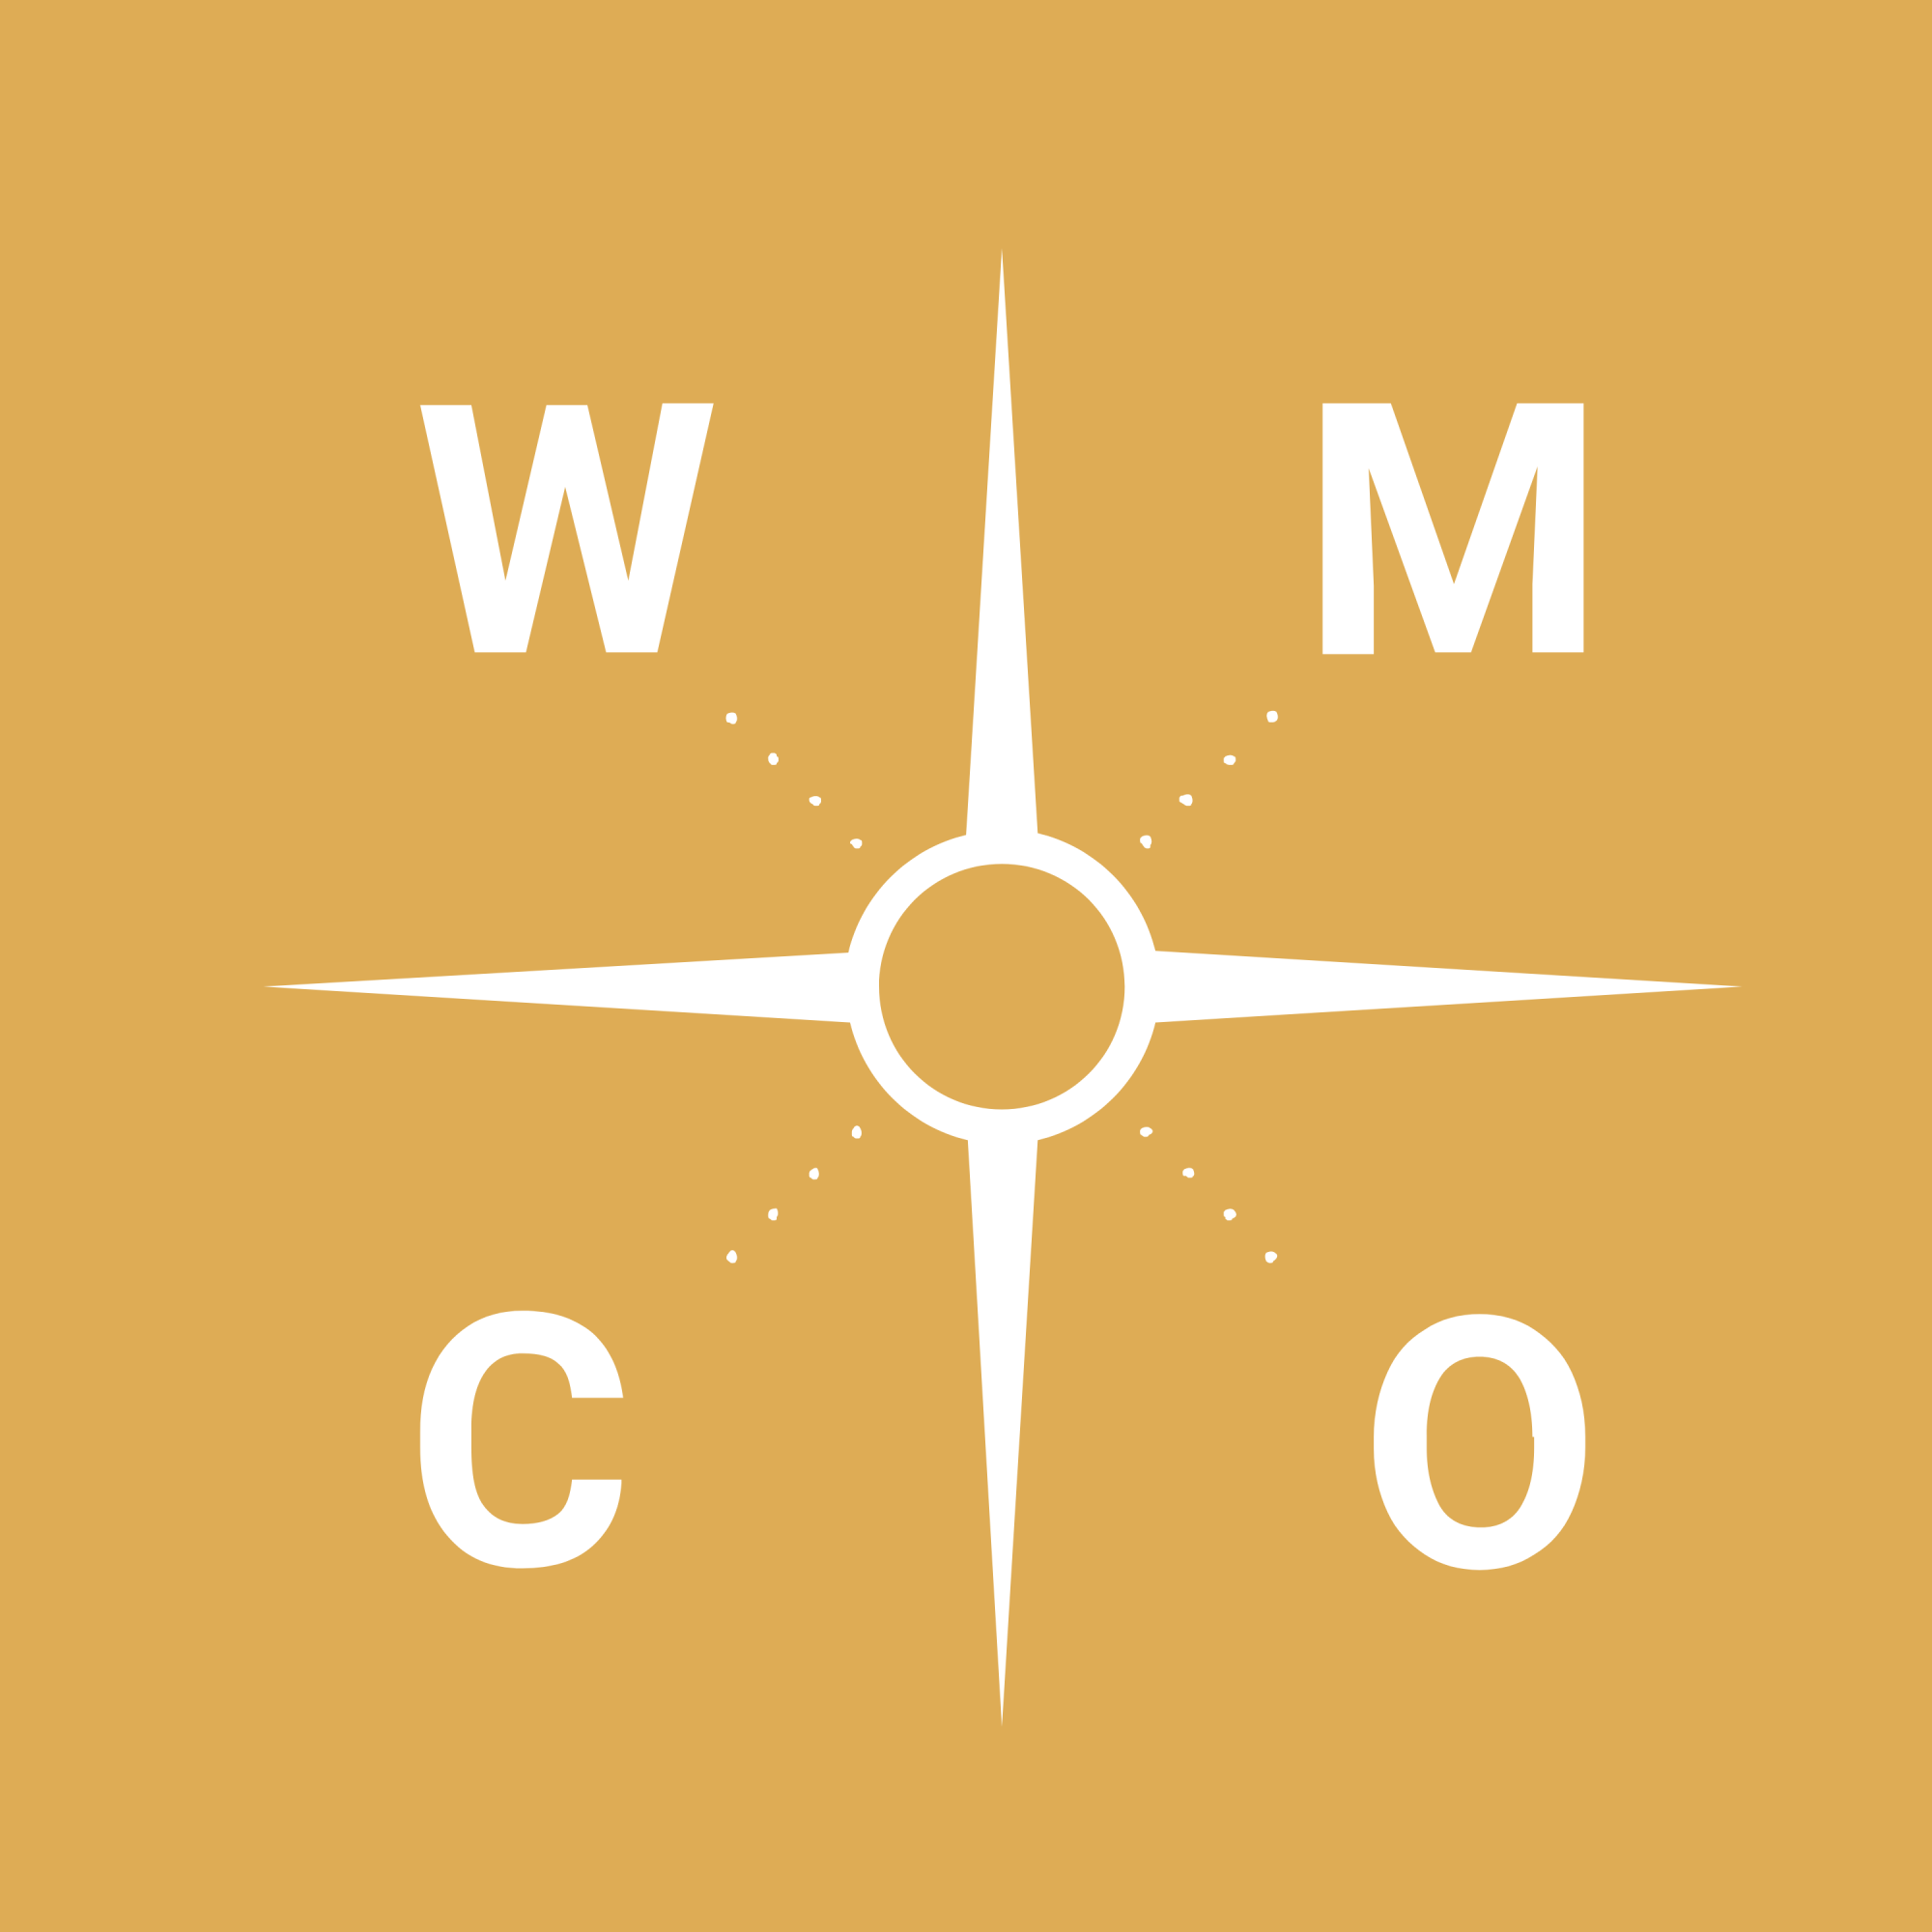 WMCO logo vierkant geel wit